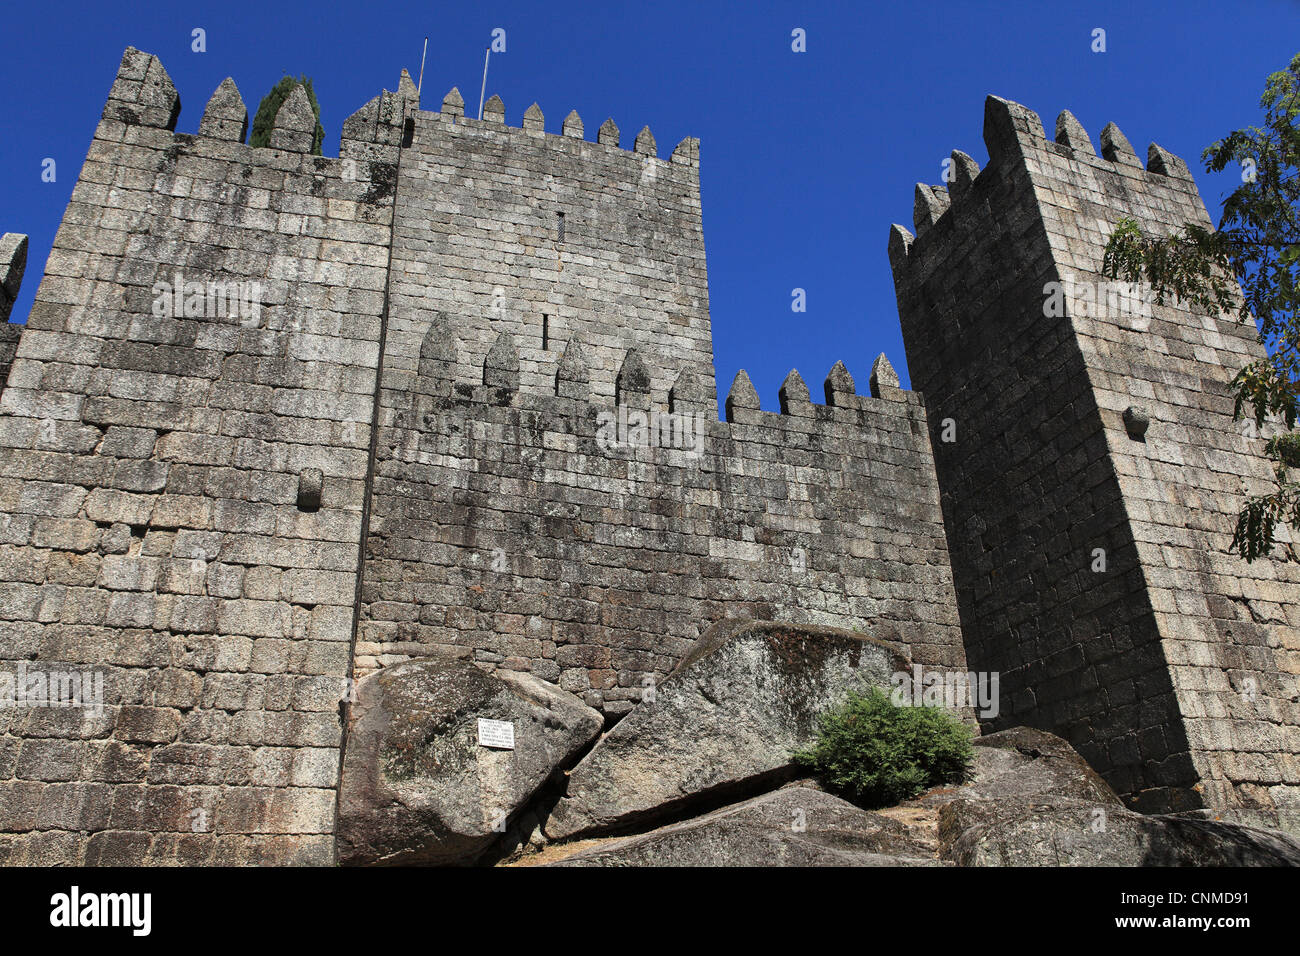 The walls of the castle (Castelo de Guimaraes) which overlooks the city of Guimaraes, Minho, Portugal, Europe Stock Photo